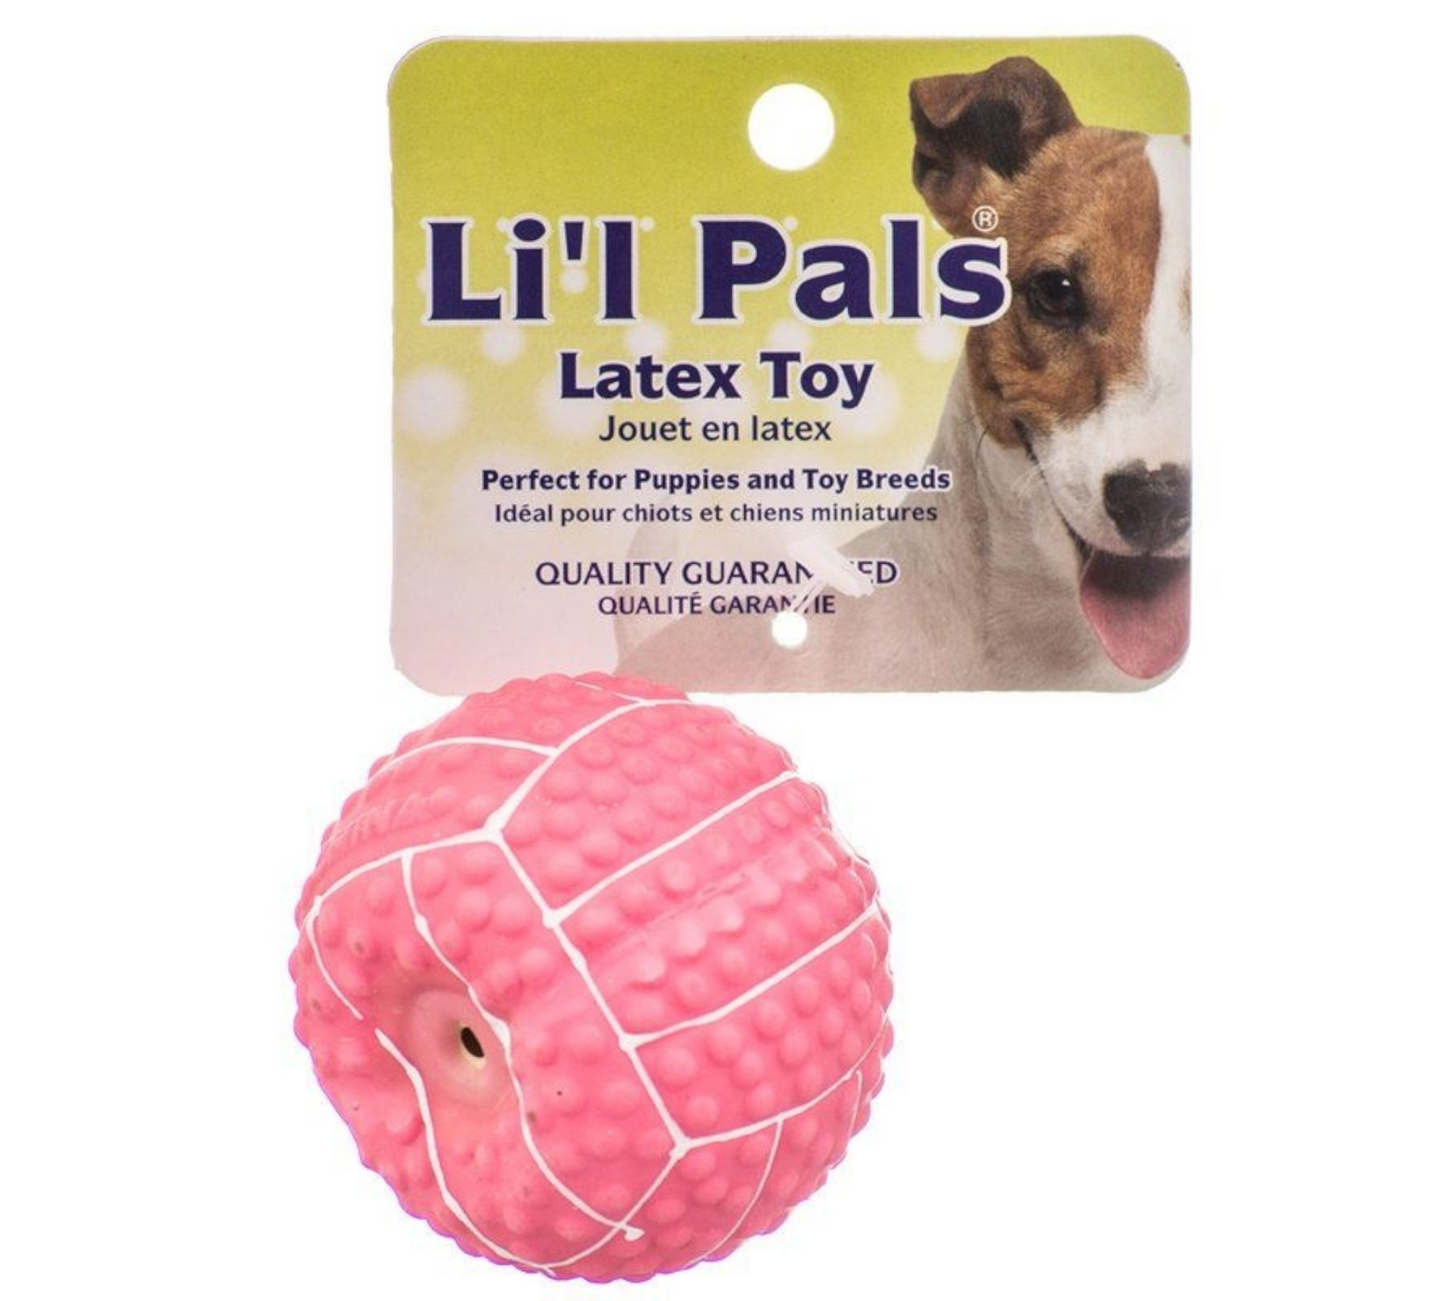 Canine's World Dog Ball Toys Li'l Pals Latex Soccer Ball Dog Toy, Lil Pal's